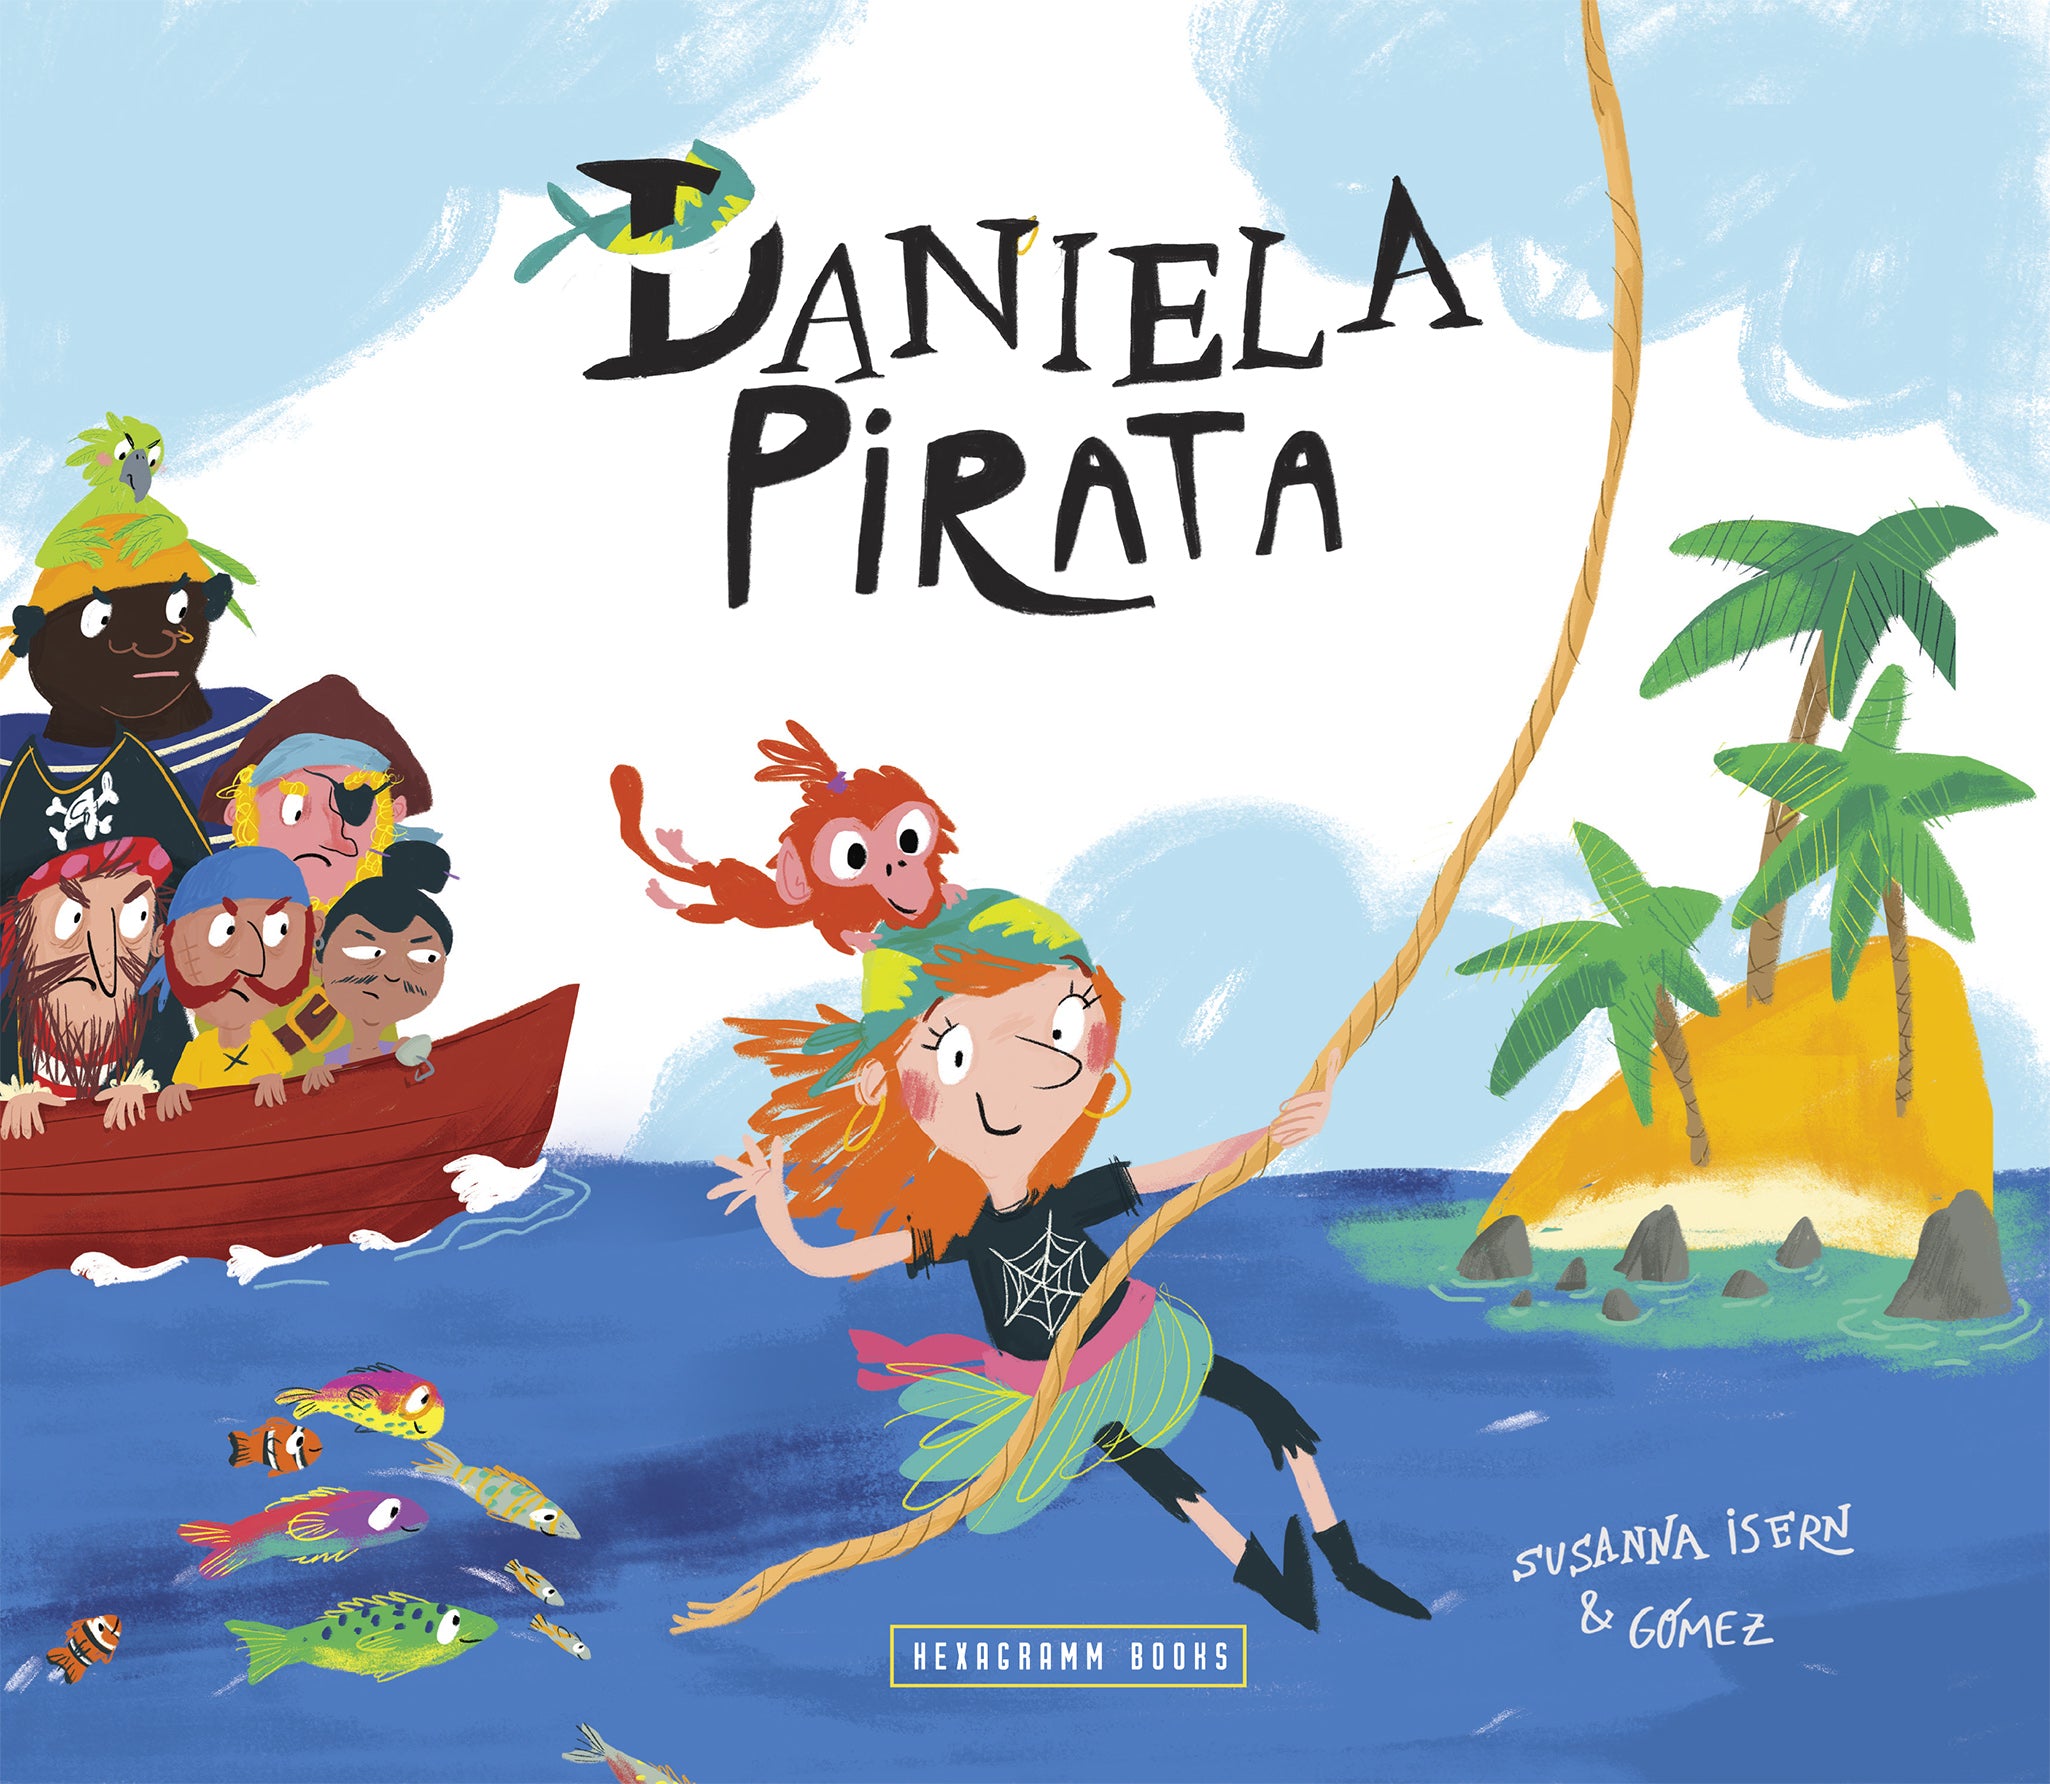 Daniela pirata (paperback) - Book Club Fantasy/SciFi Set of 6